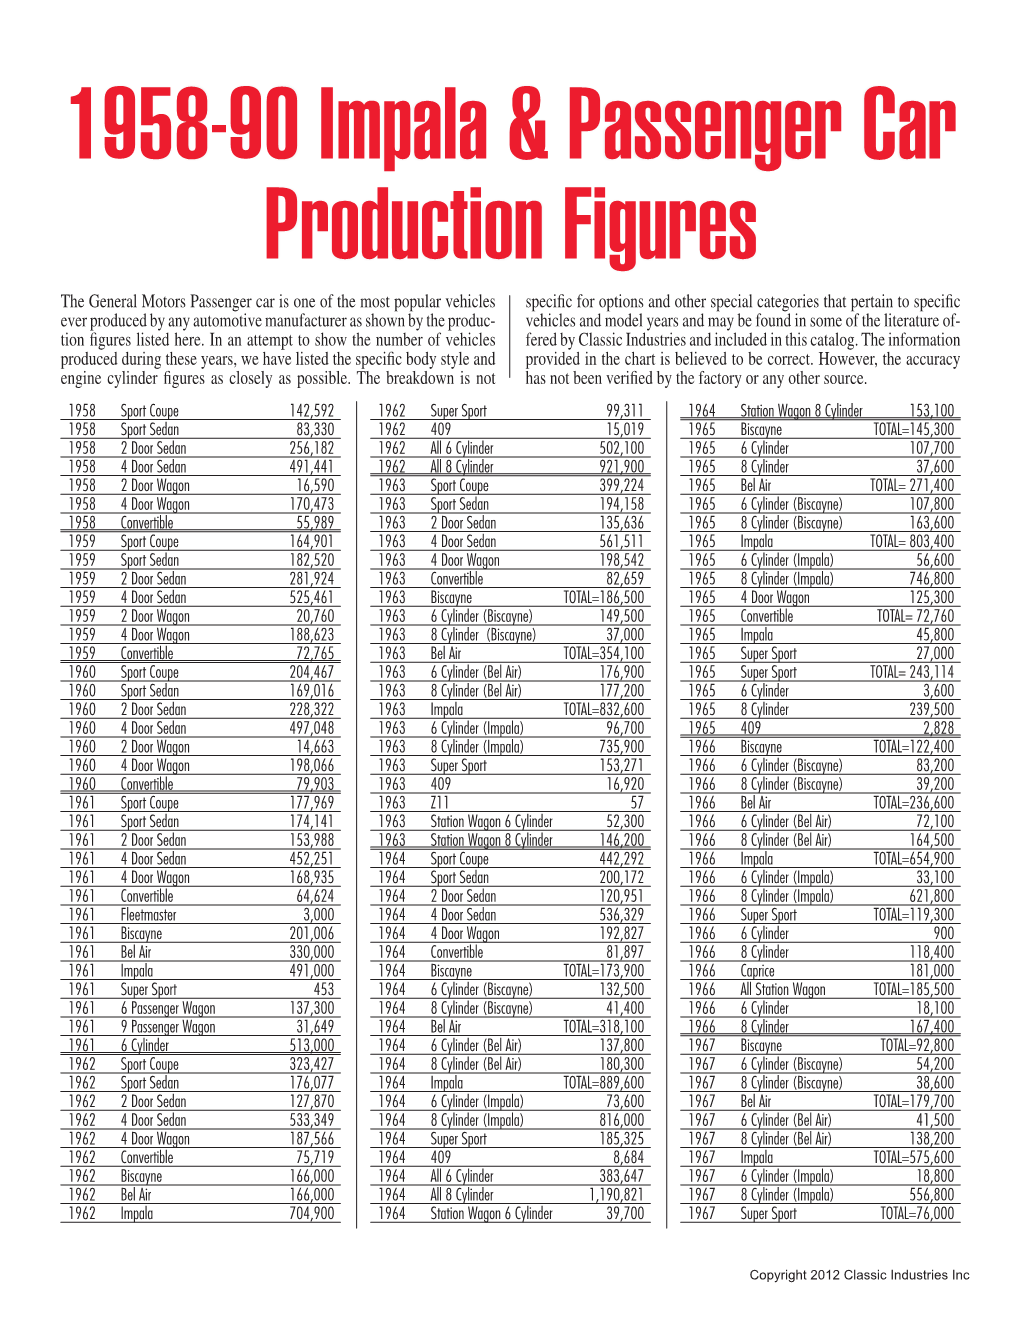 1958-90 Impala & Passenger Car Production Figures